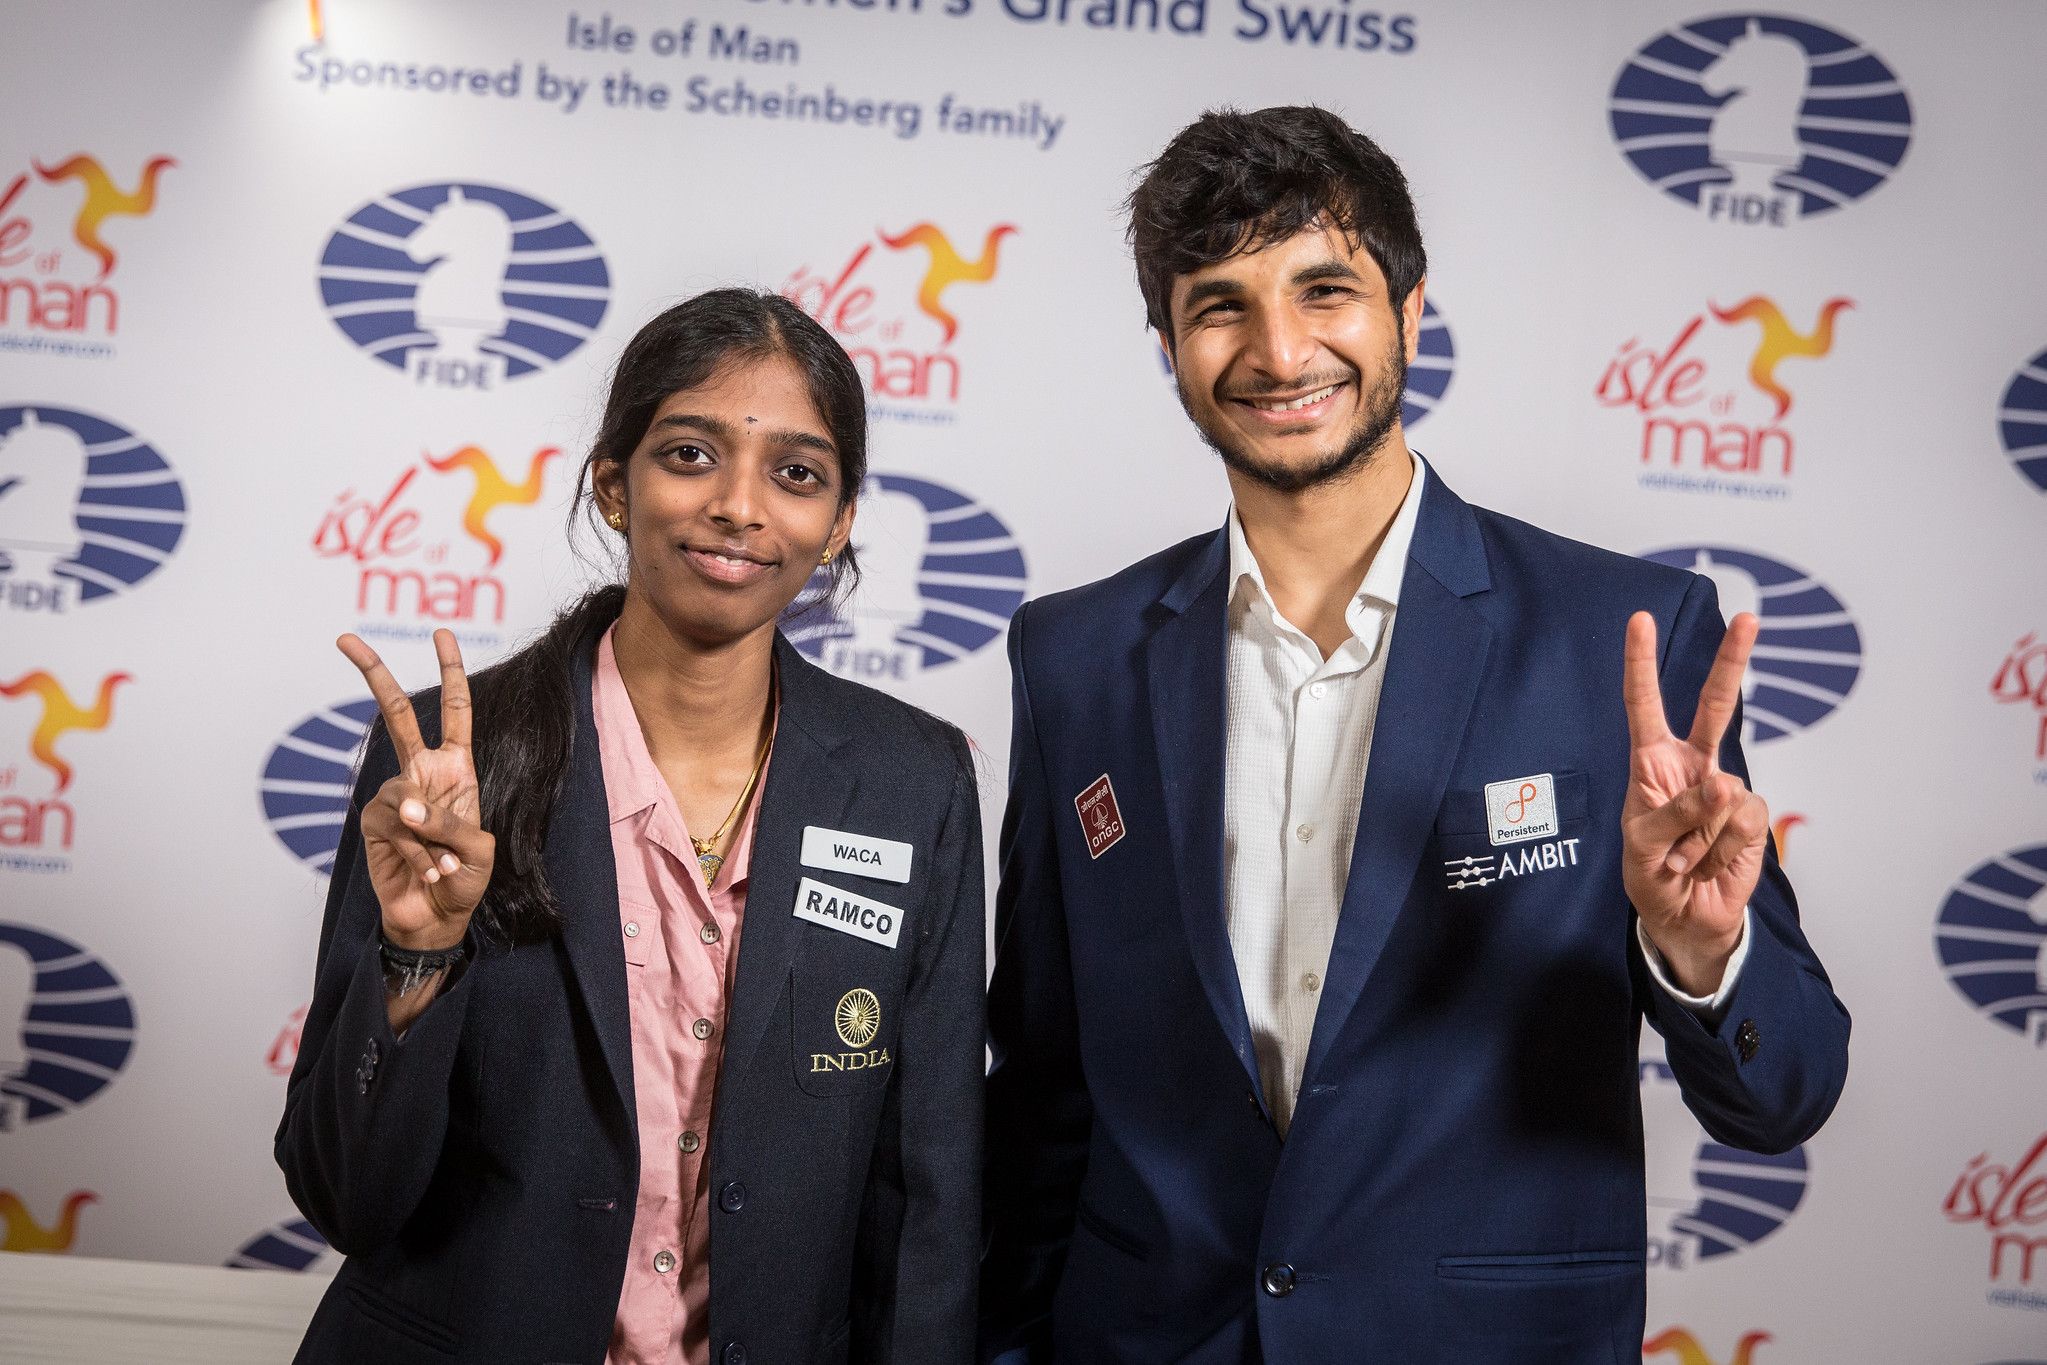 News -  - FIDE Grand Swiss / Women's Grand Swiss